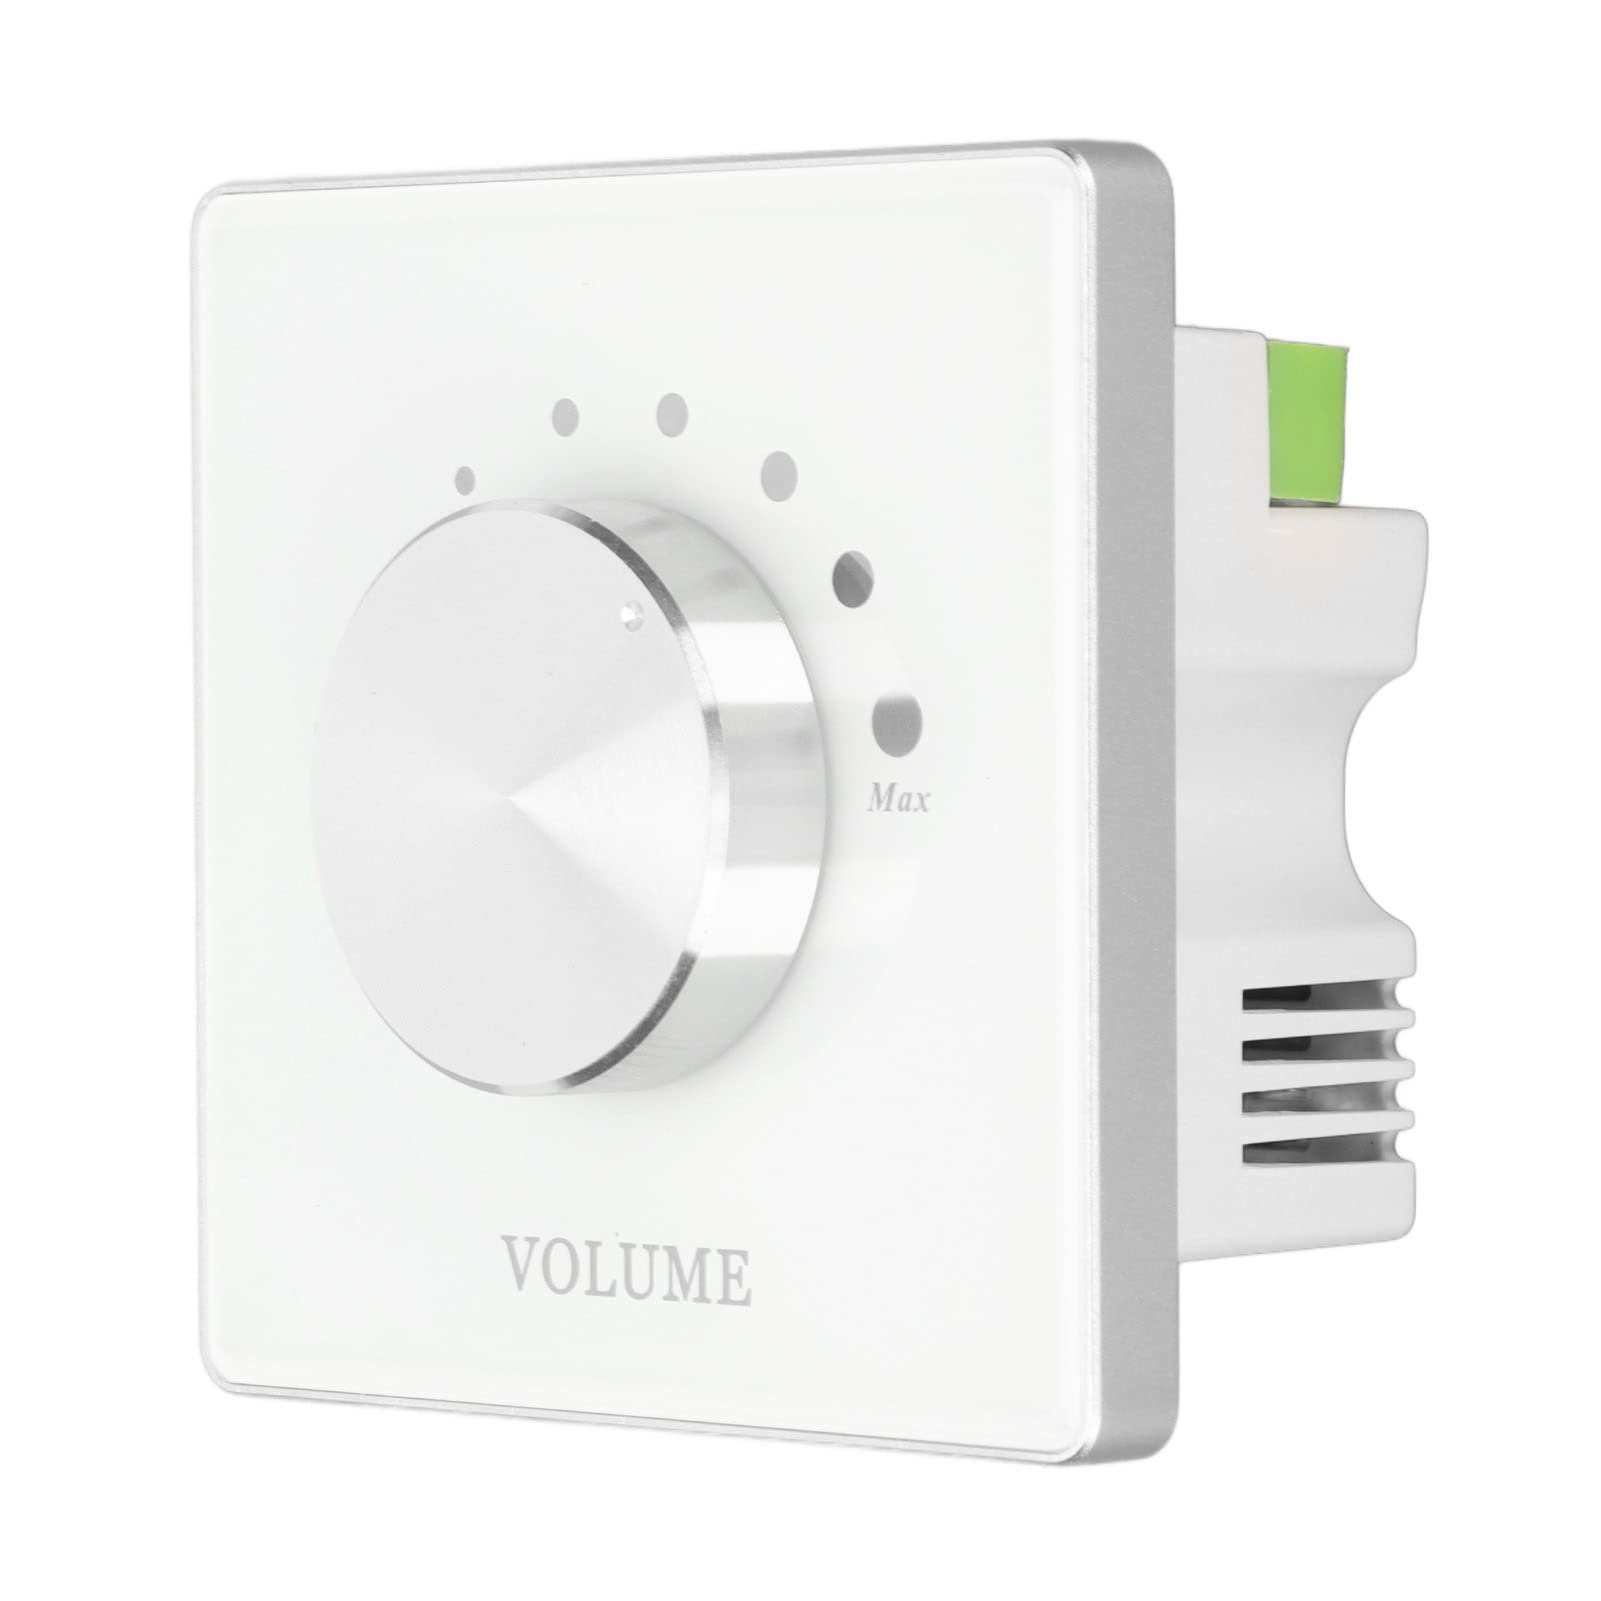 Smart Home Volume Controller, 7 Level Volume Control Speaker Volume Control Knob, Easy Installation, White, for Home Office Hotel